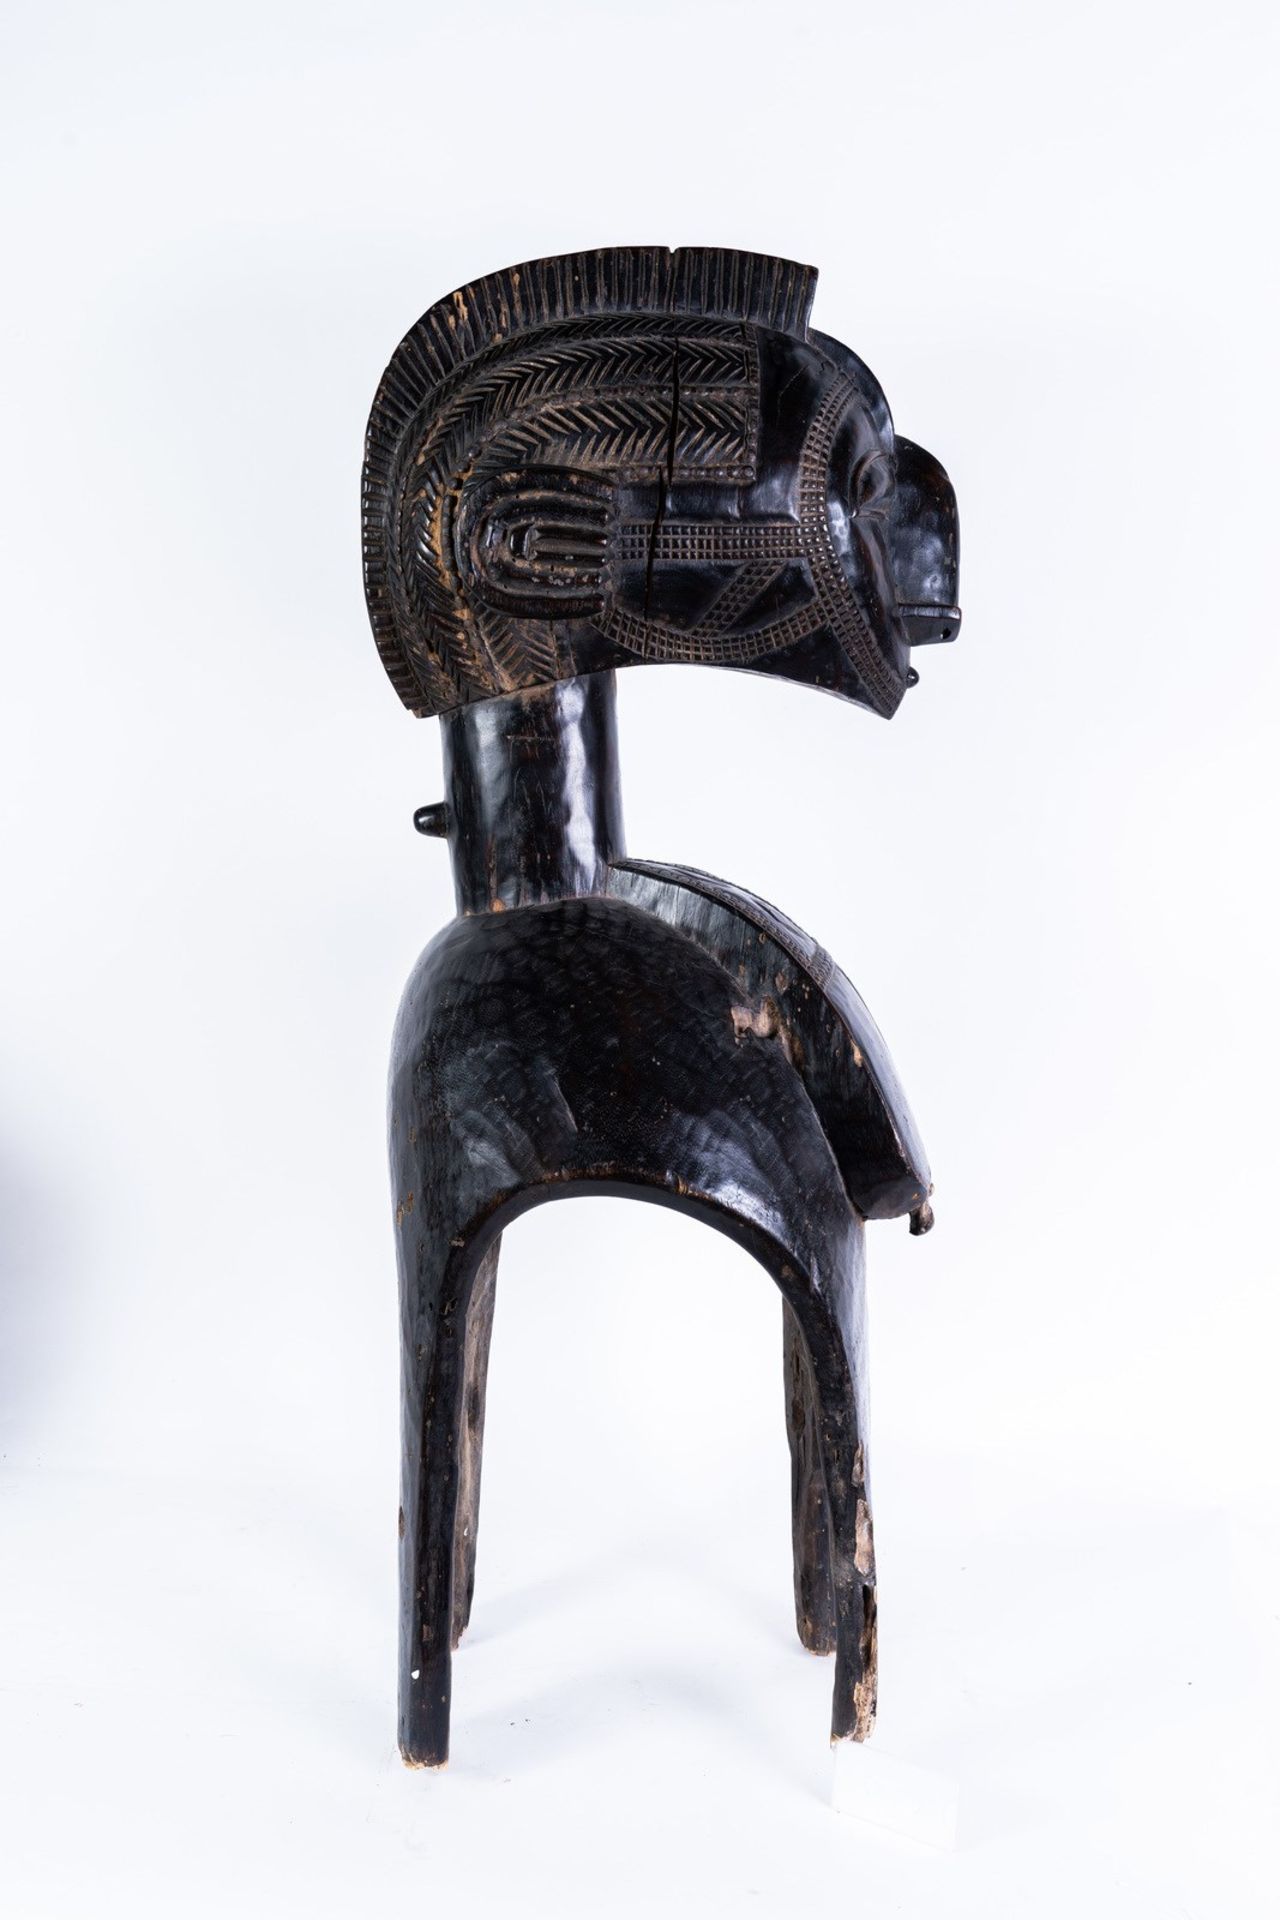 Arte africana Nimba mask, BagaGuinea. - Image 2 of 4